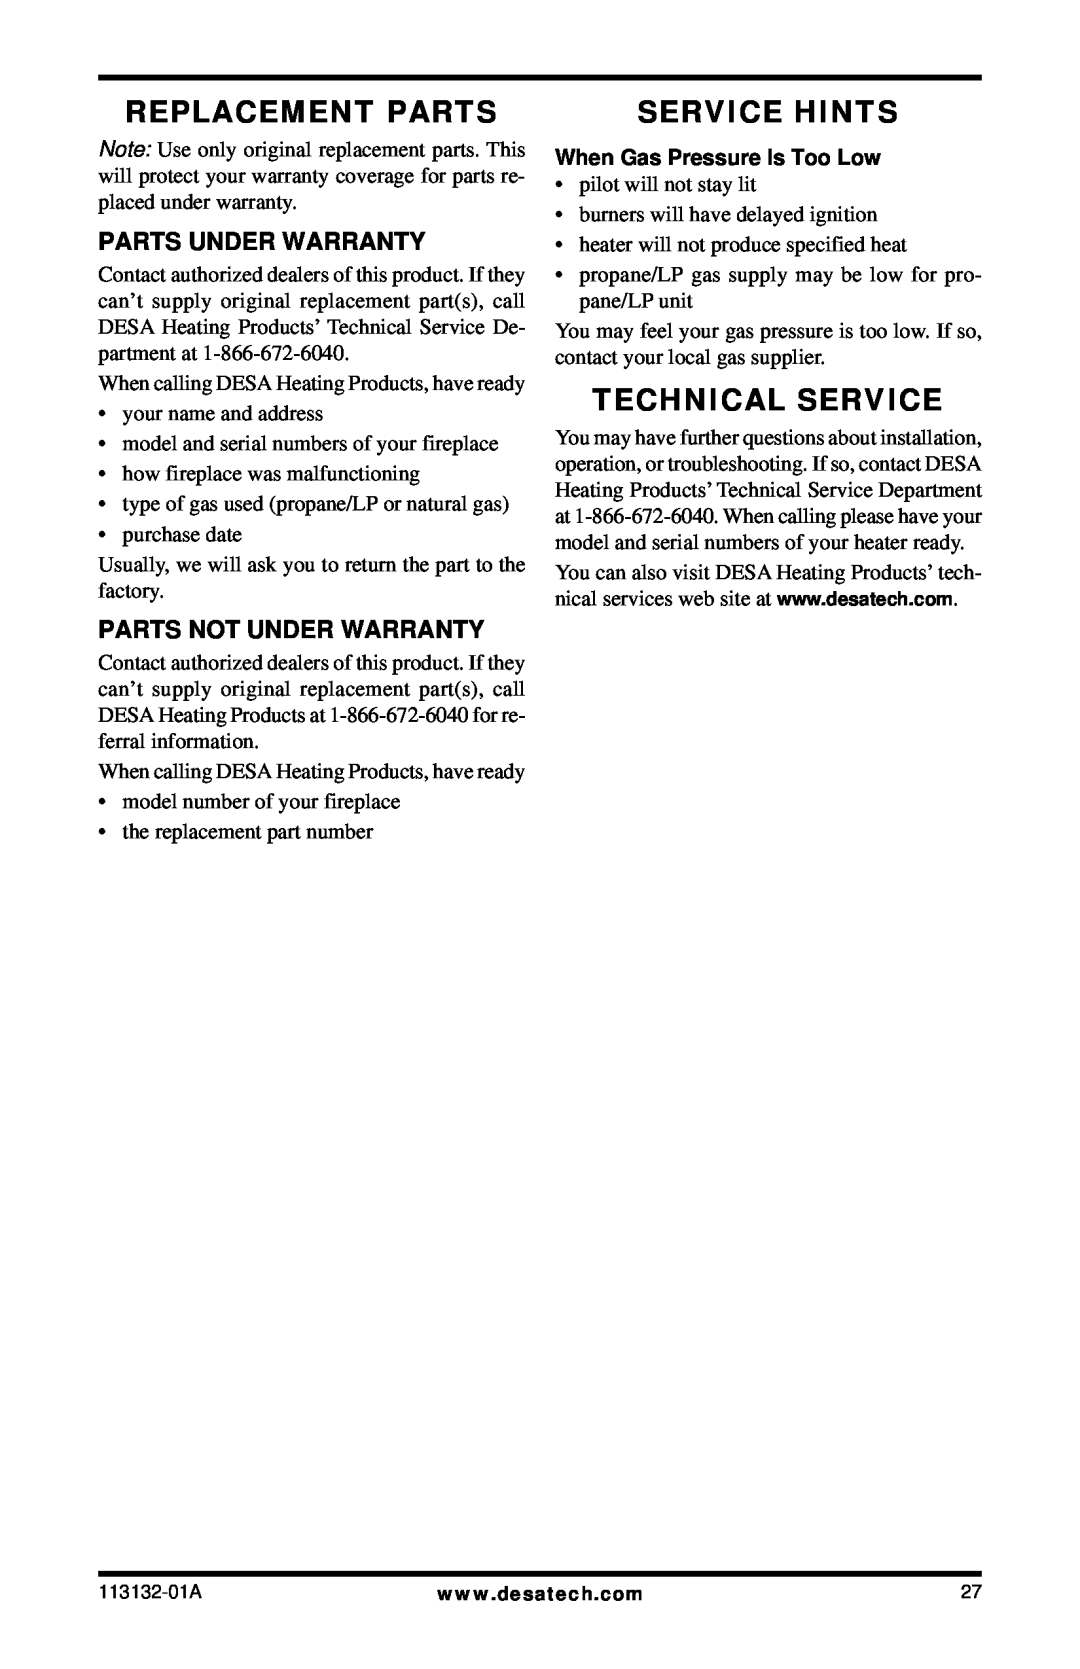 Desa VSGF33NRB Replacement Parts, Service Hints, Technical Service, Parts Under Warranty, Parts Not Under Warranty 